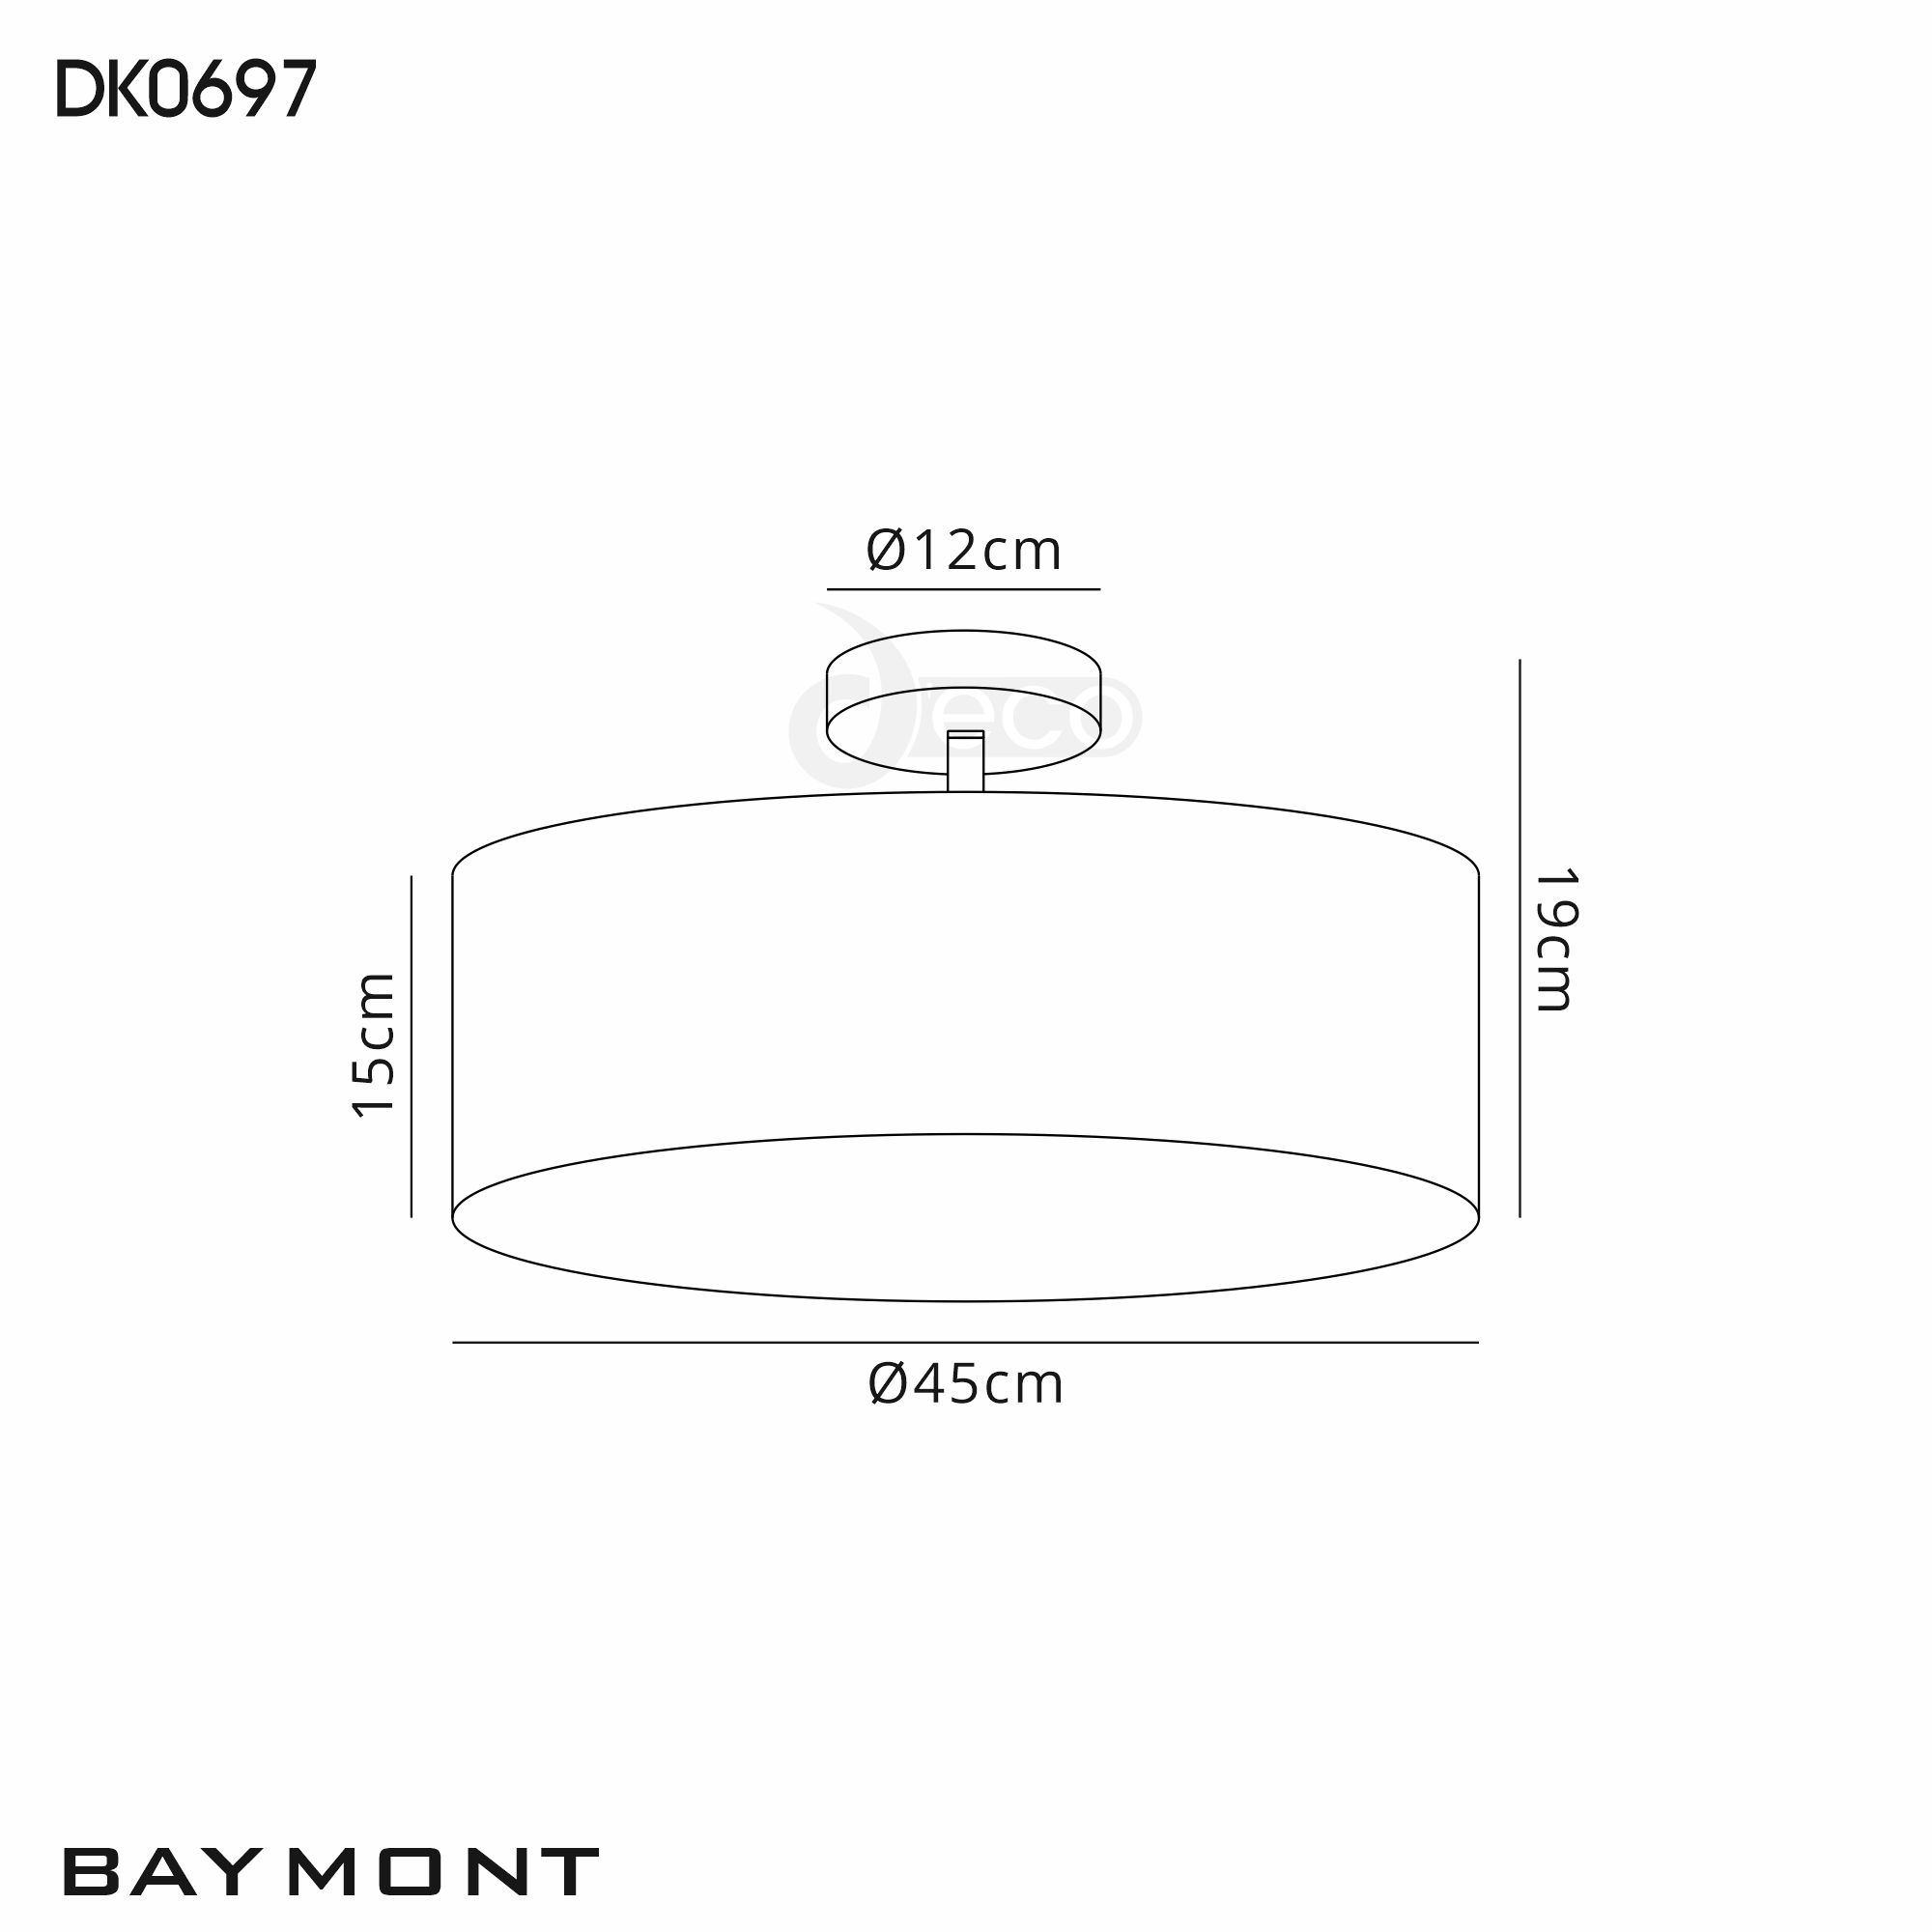 DK0697  Baymont 45cm; Semi Flush 3 Light Polished Chrome; White